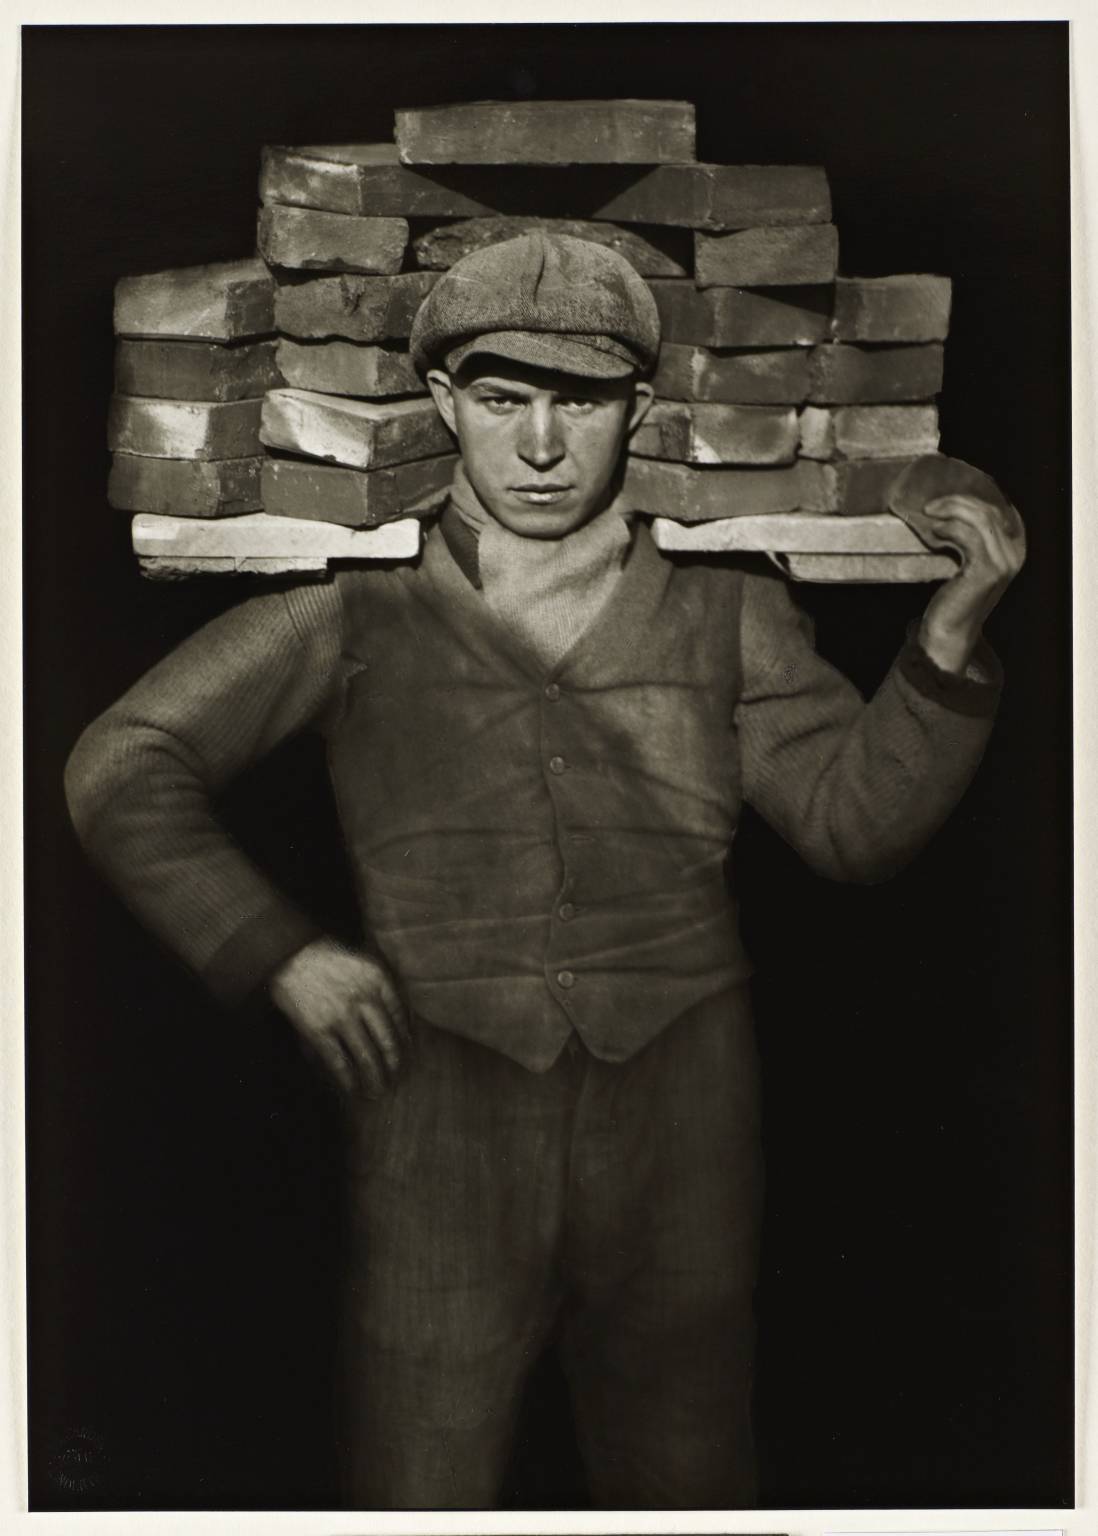 Bricklayer 1928 by August Sander 1876-1964